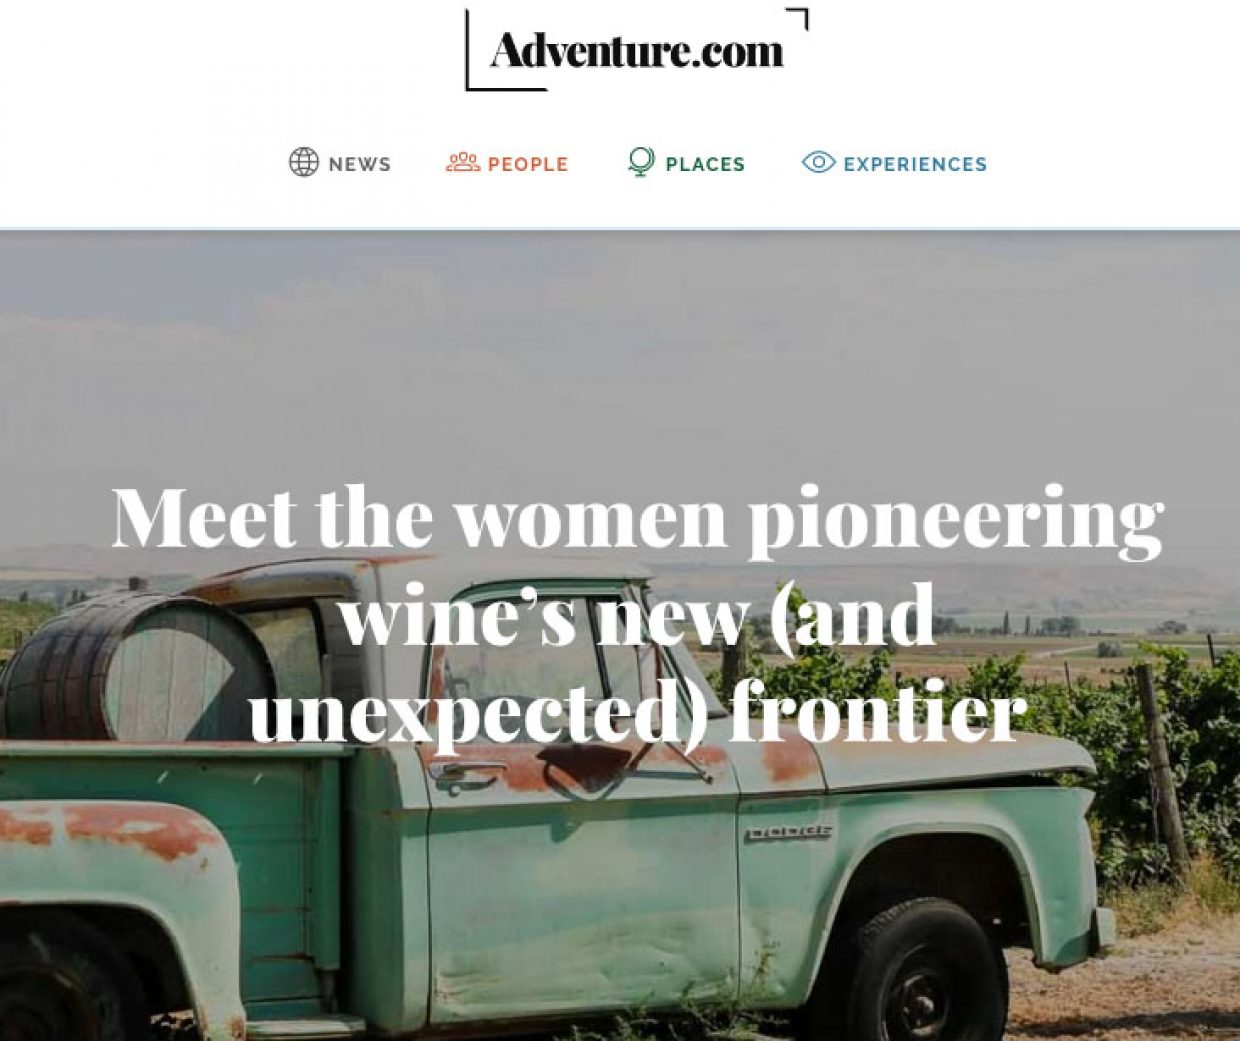 ICW featured on Adventure.com